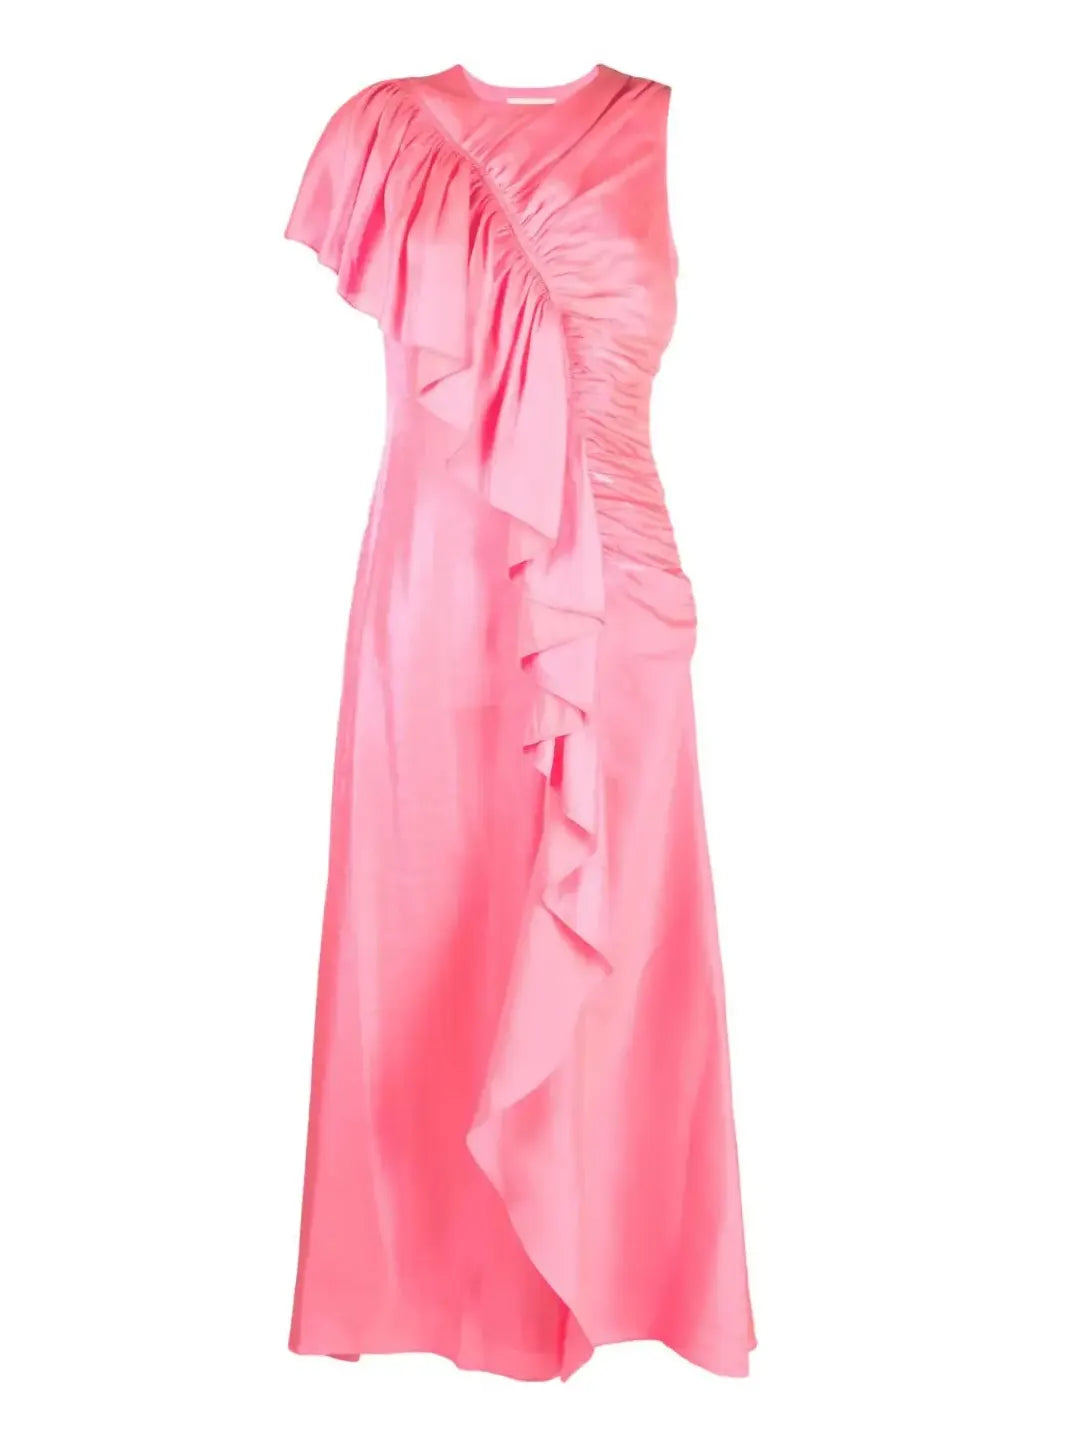 Lali dress, dahlia pink